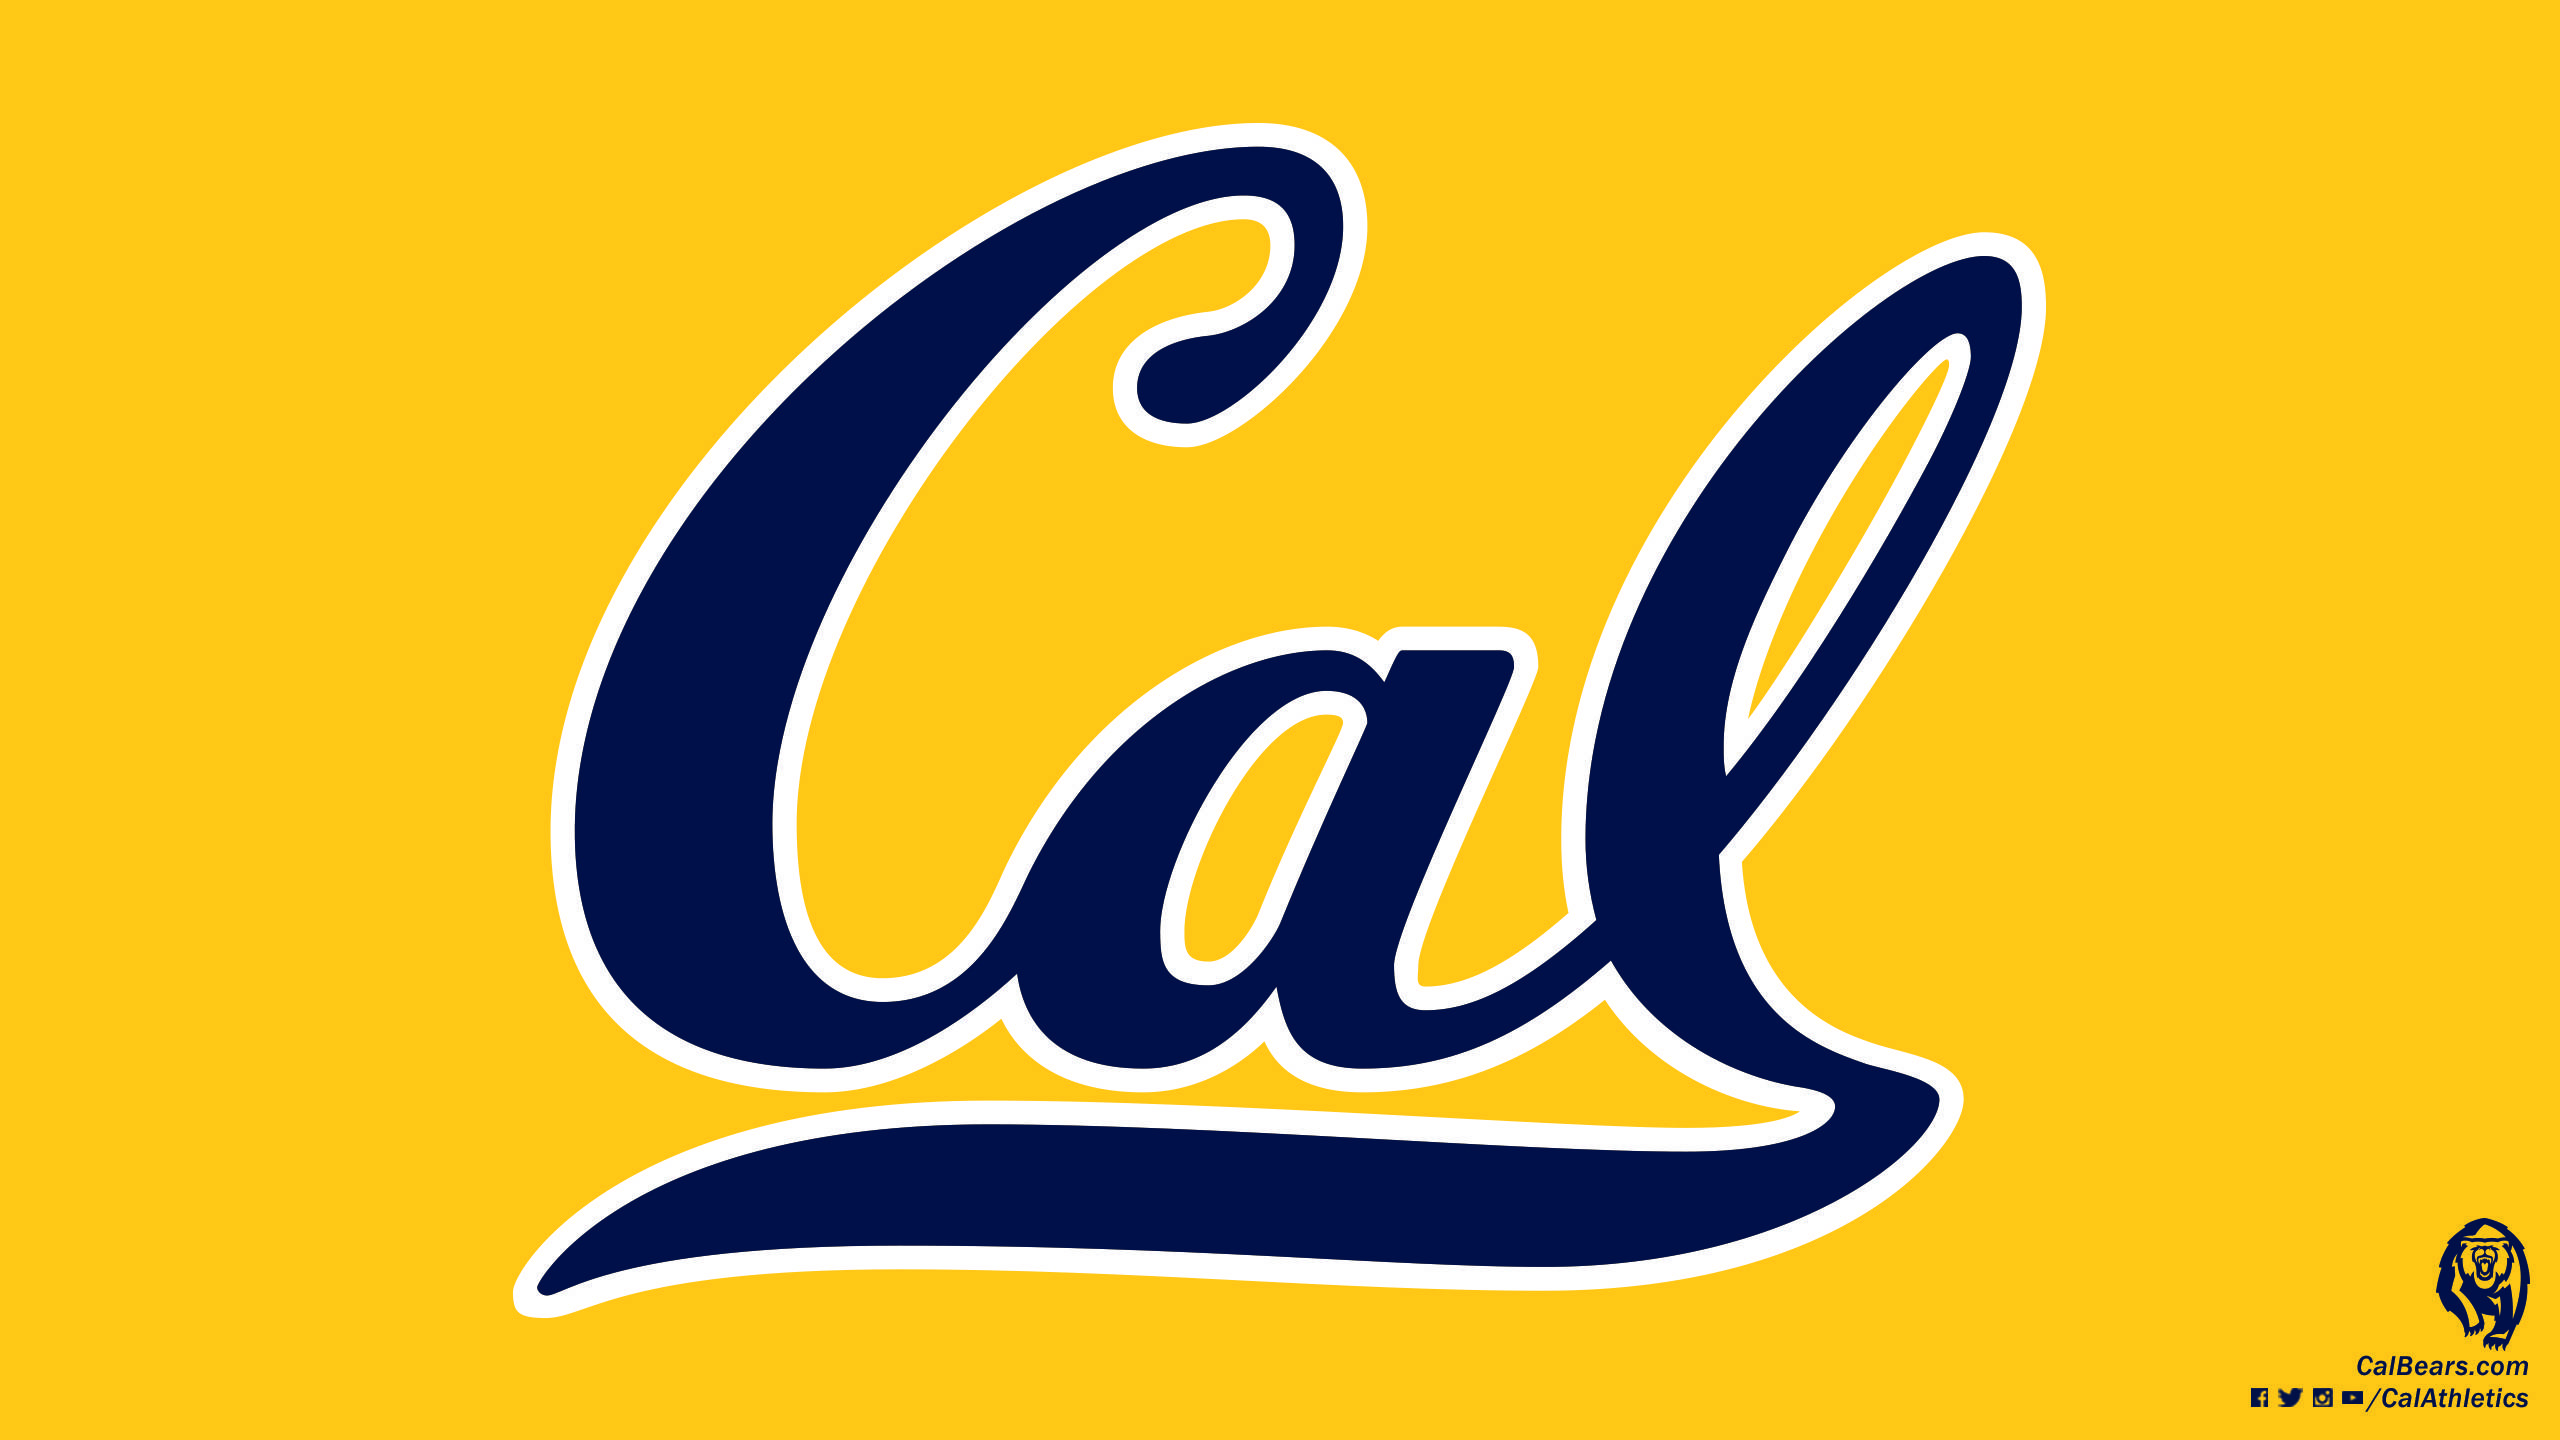 CalBears.com. University of California Official Athletic Site